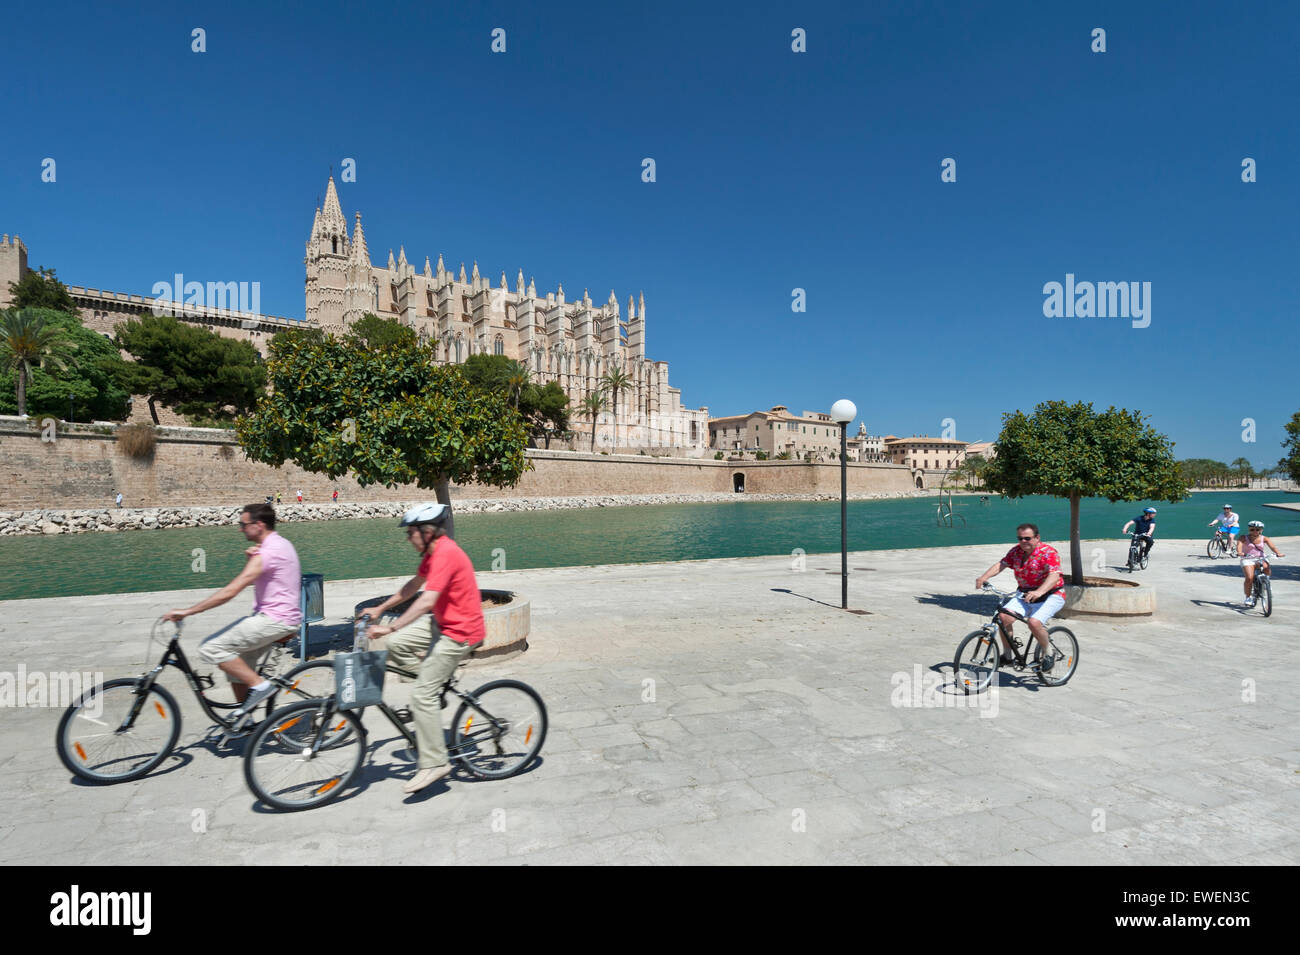 Palma Mallorca cycling tour group of cyclists riding near Palma Cathedral in Parc de la Mar Palma historic center Mallorca Spain EU Stock Photo